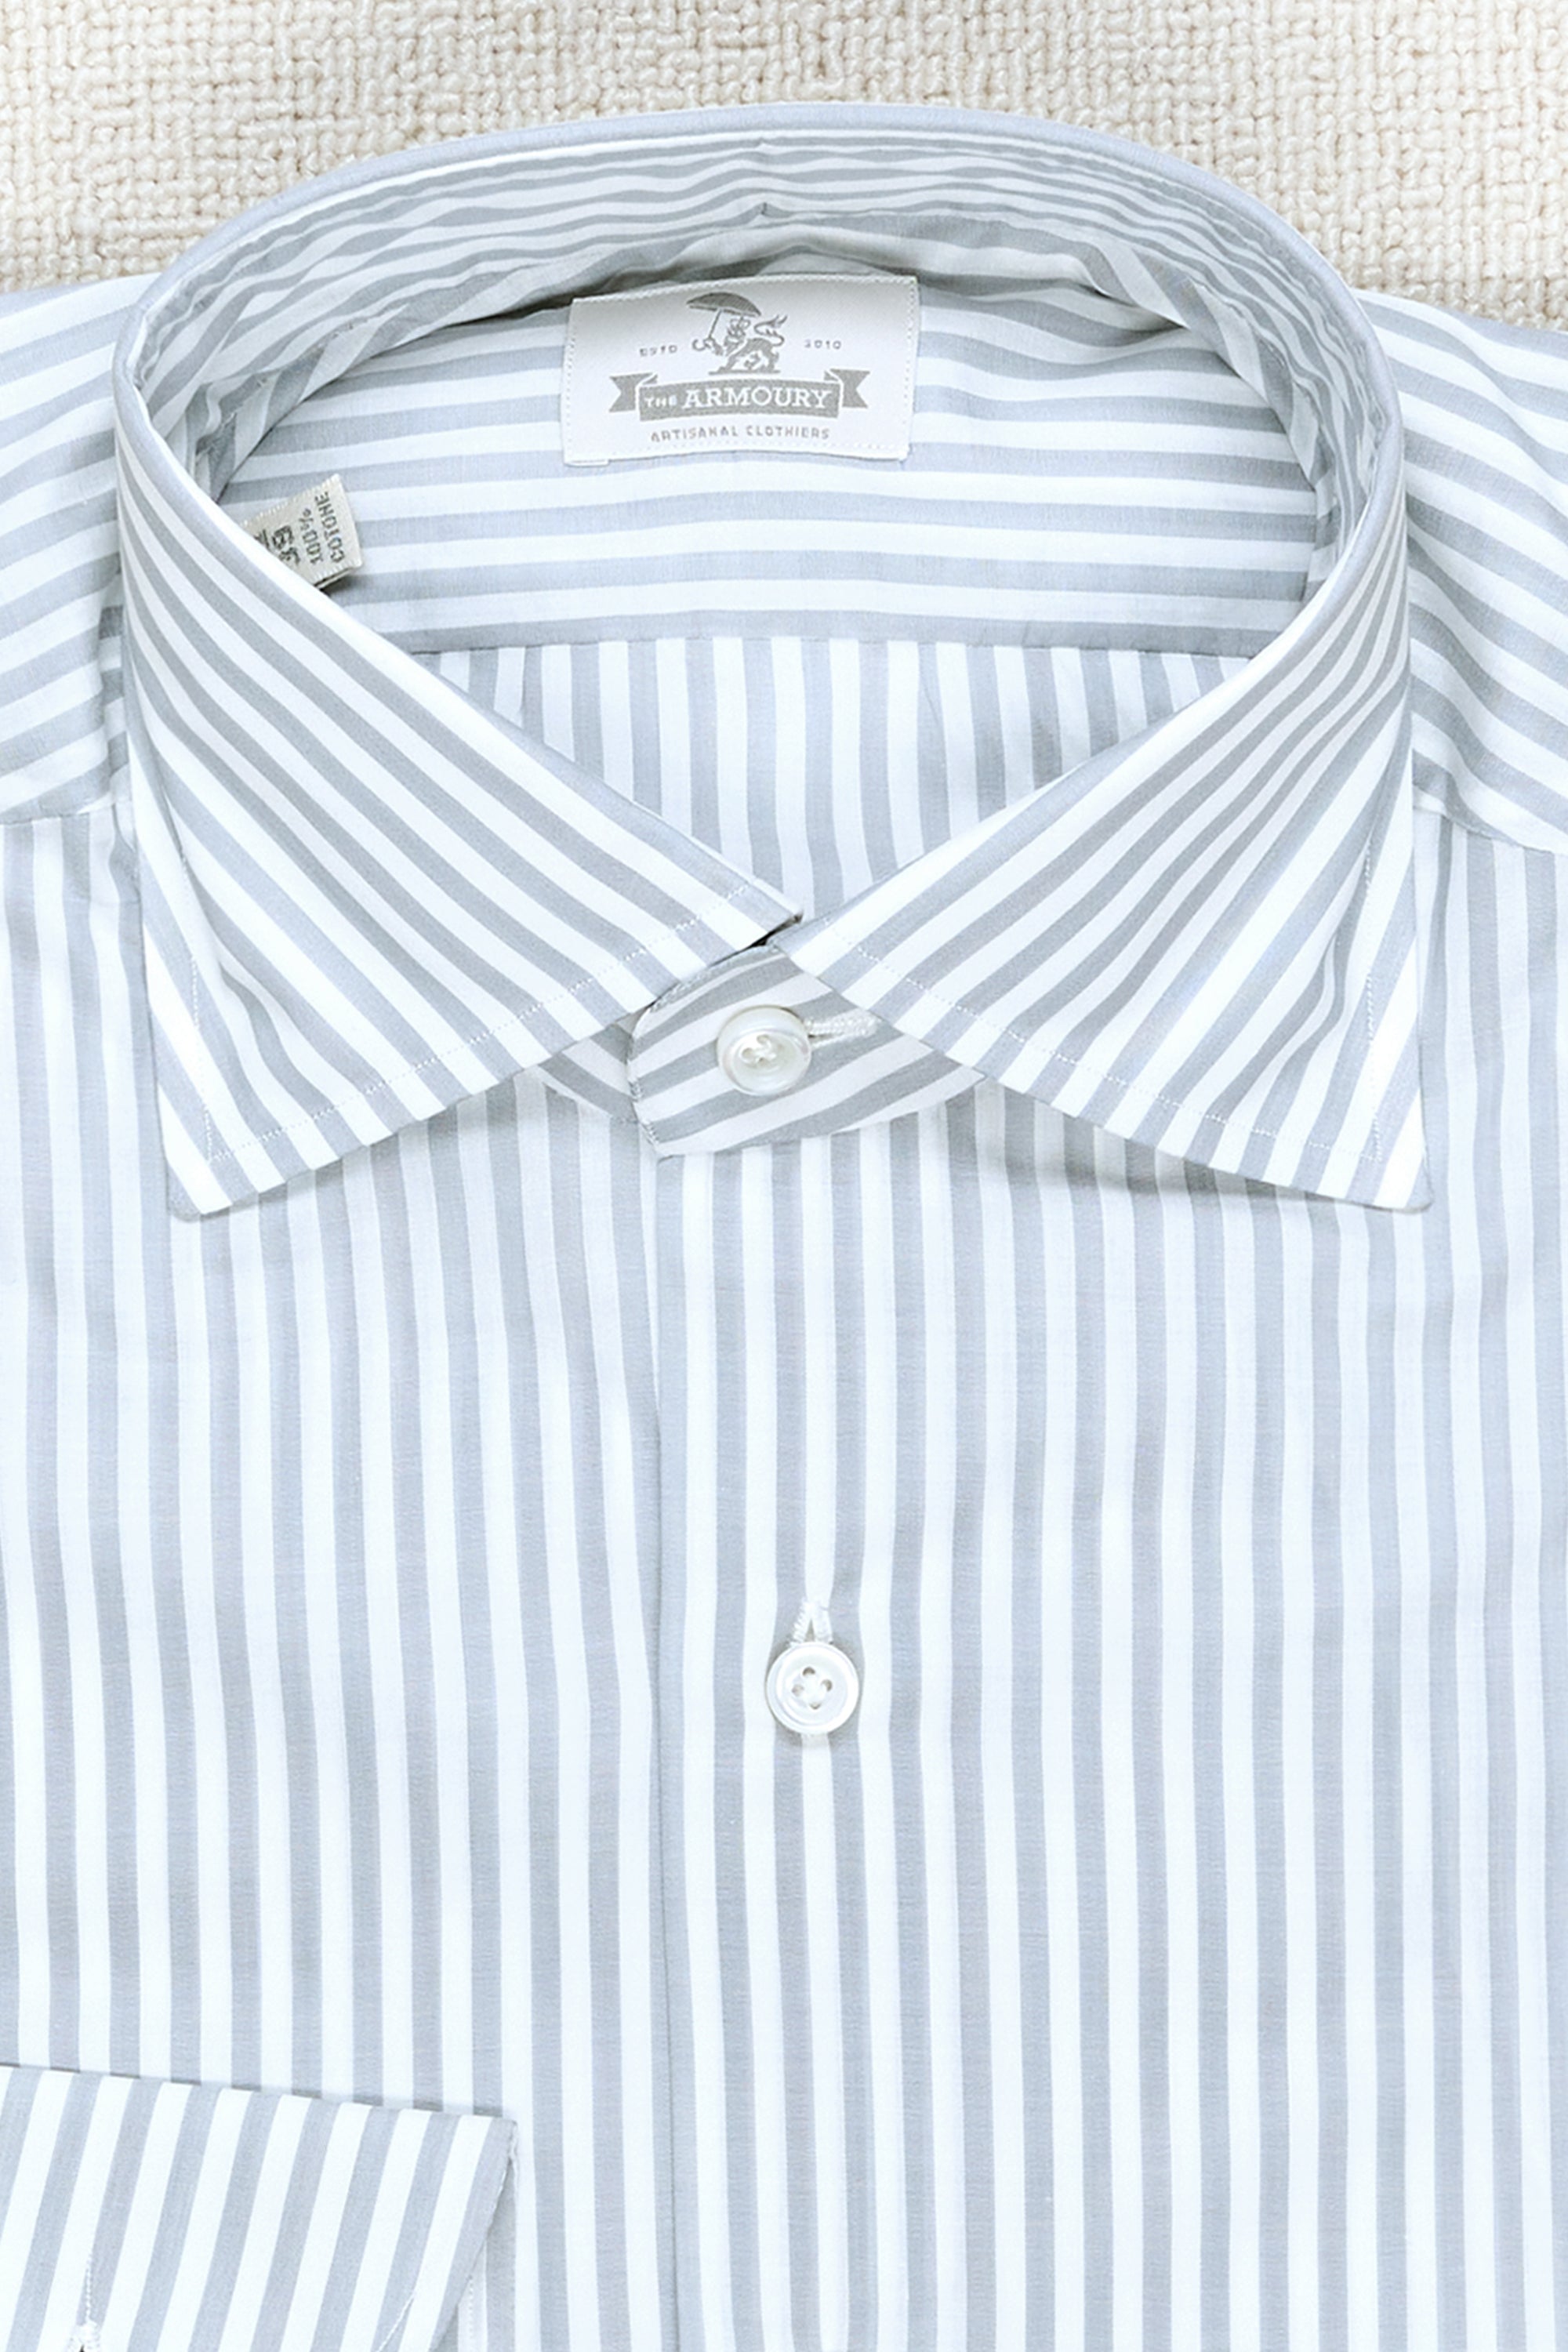 The Armoury Exclusive Carlo Riva White/Grey Butcher Stripe Cotton Spread Collar Shirt